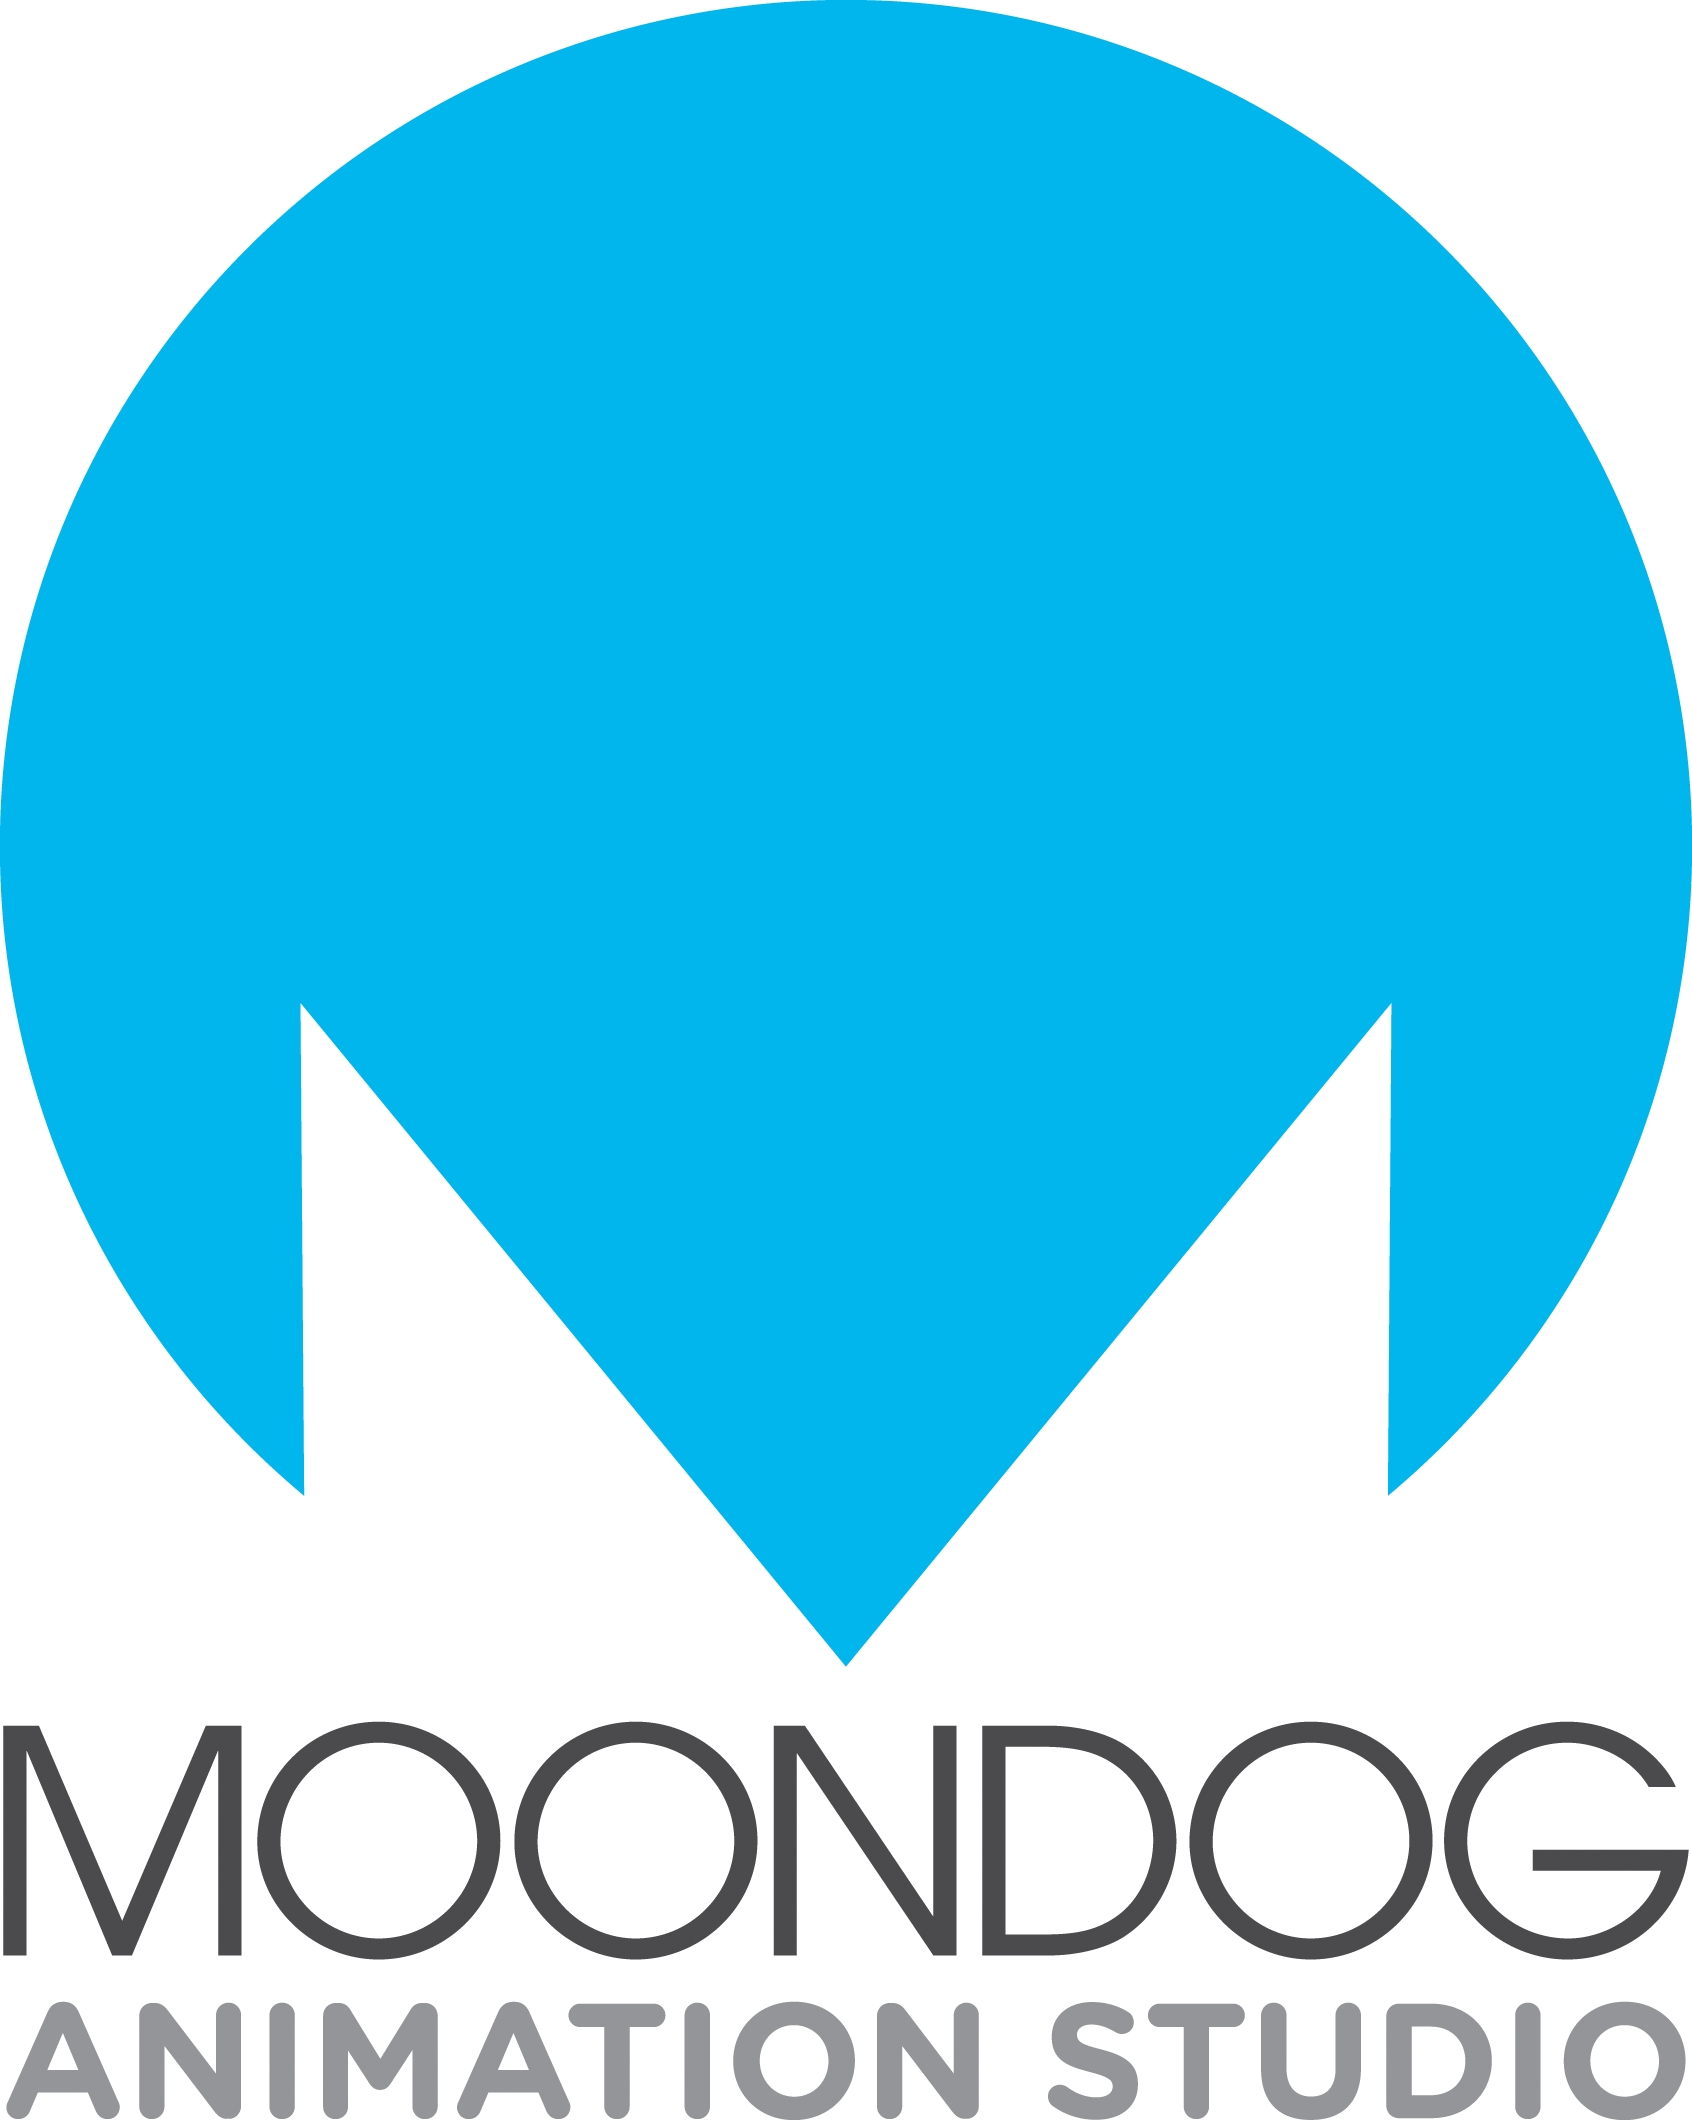 MOONDOG Animation Studio